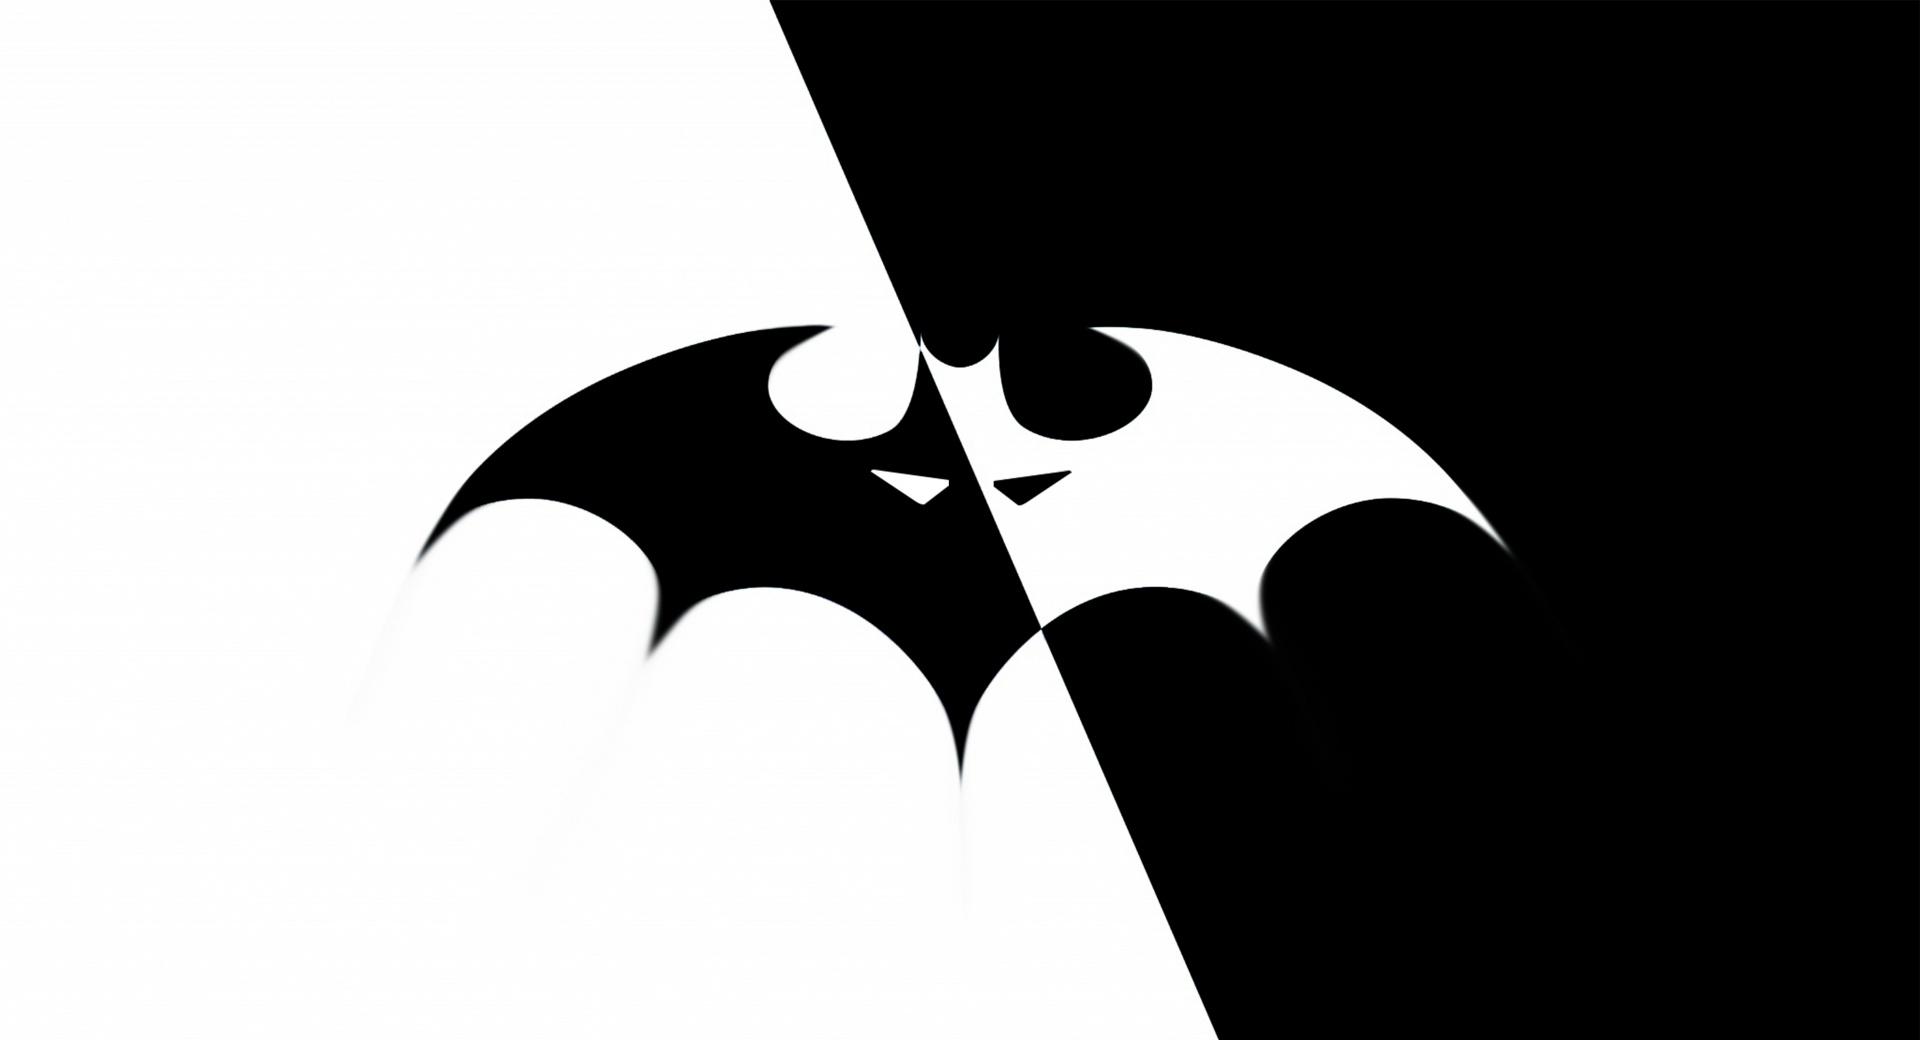 Batman Logo at 1024 x 1024 iPad size wallpapers HD quality